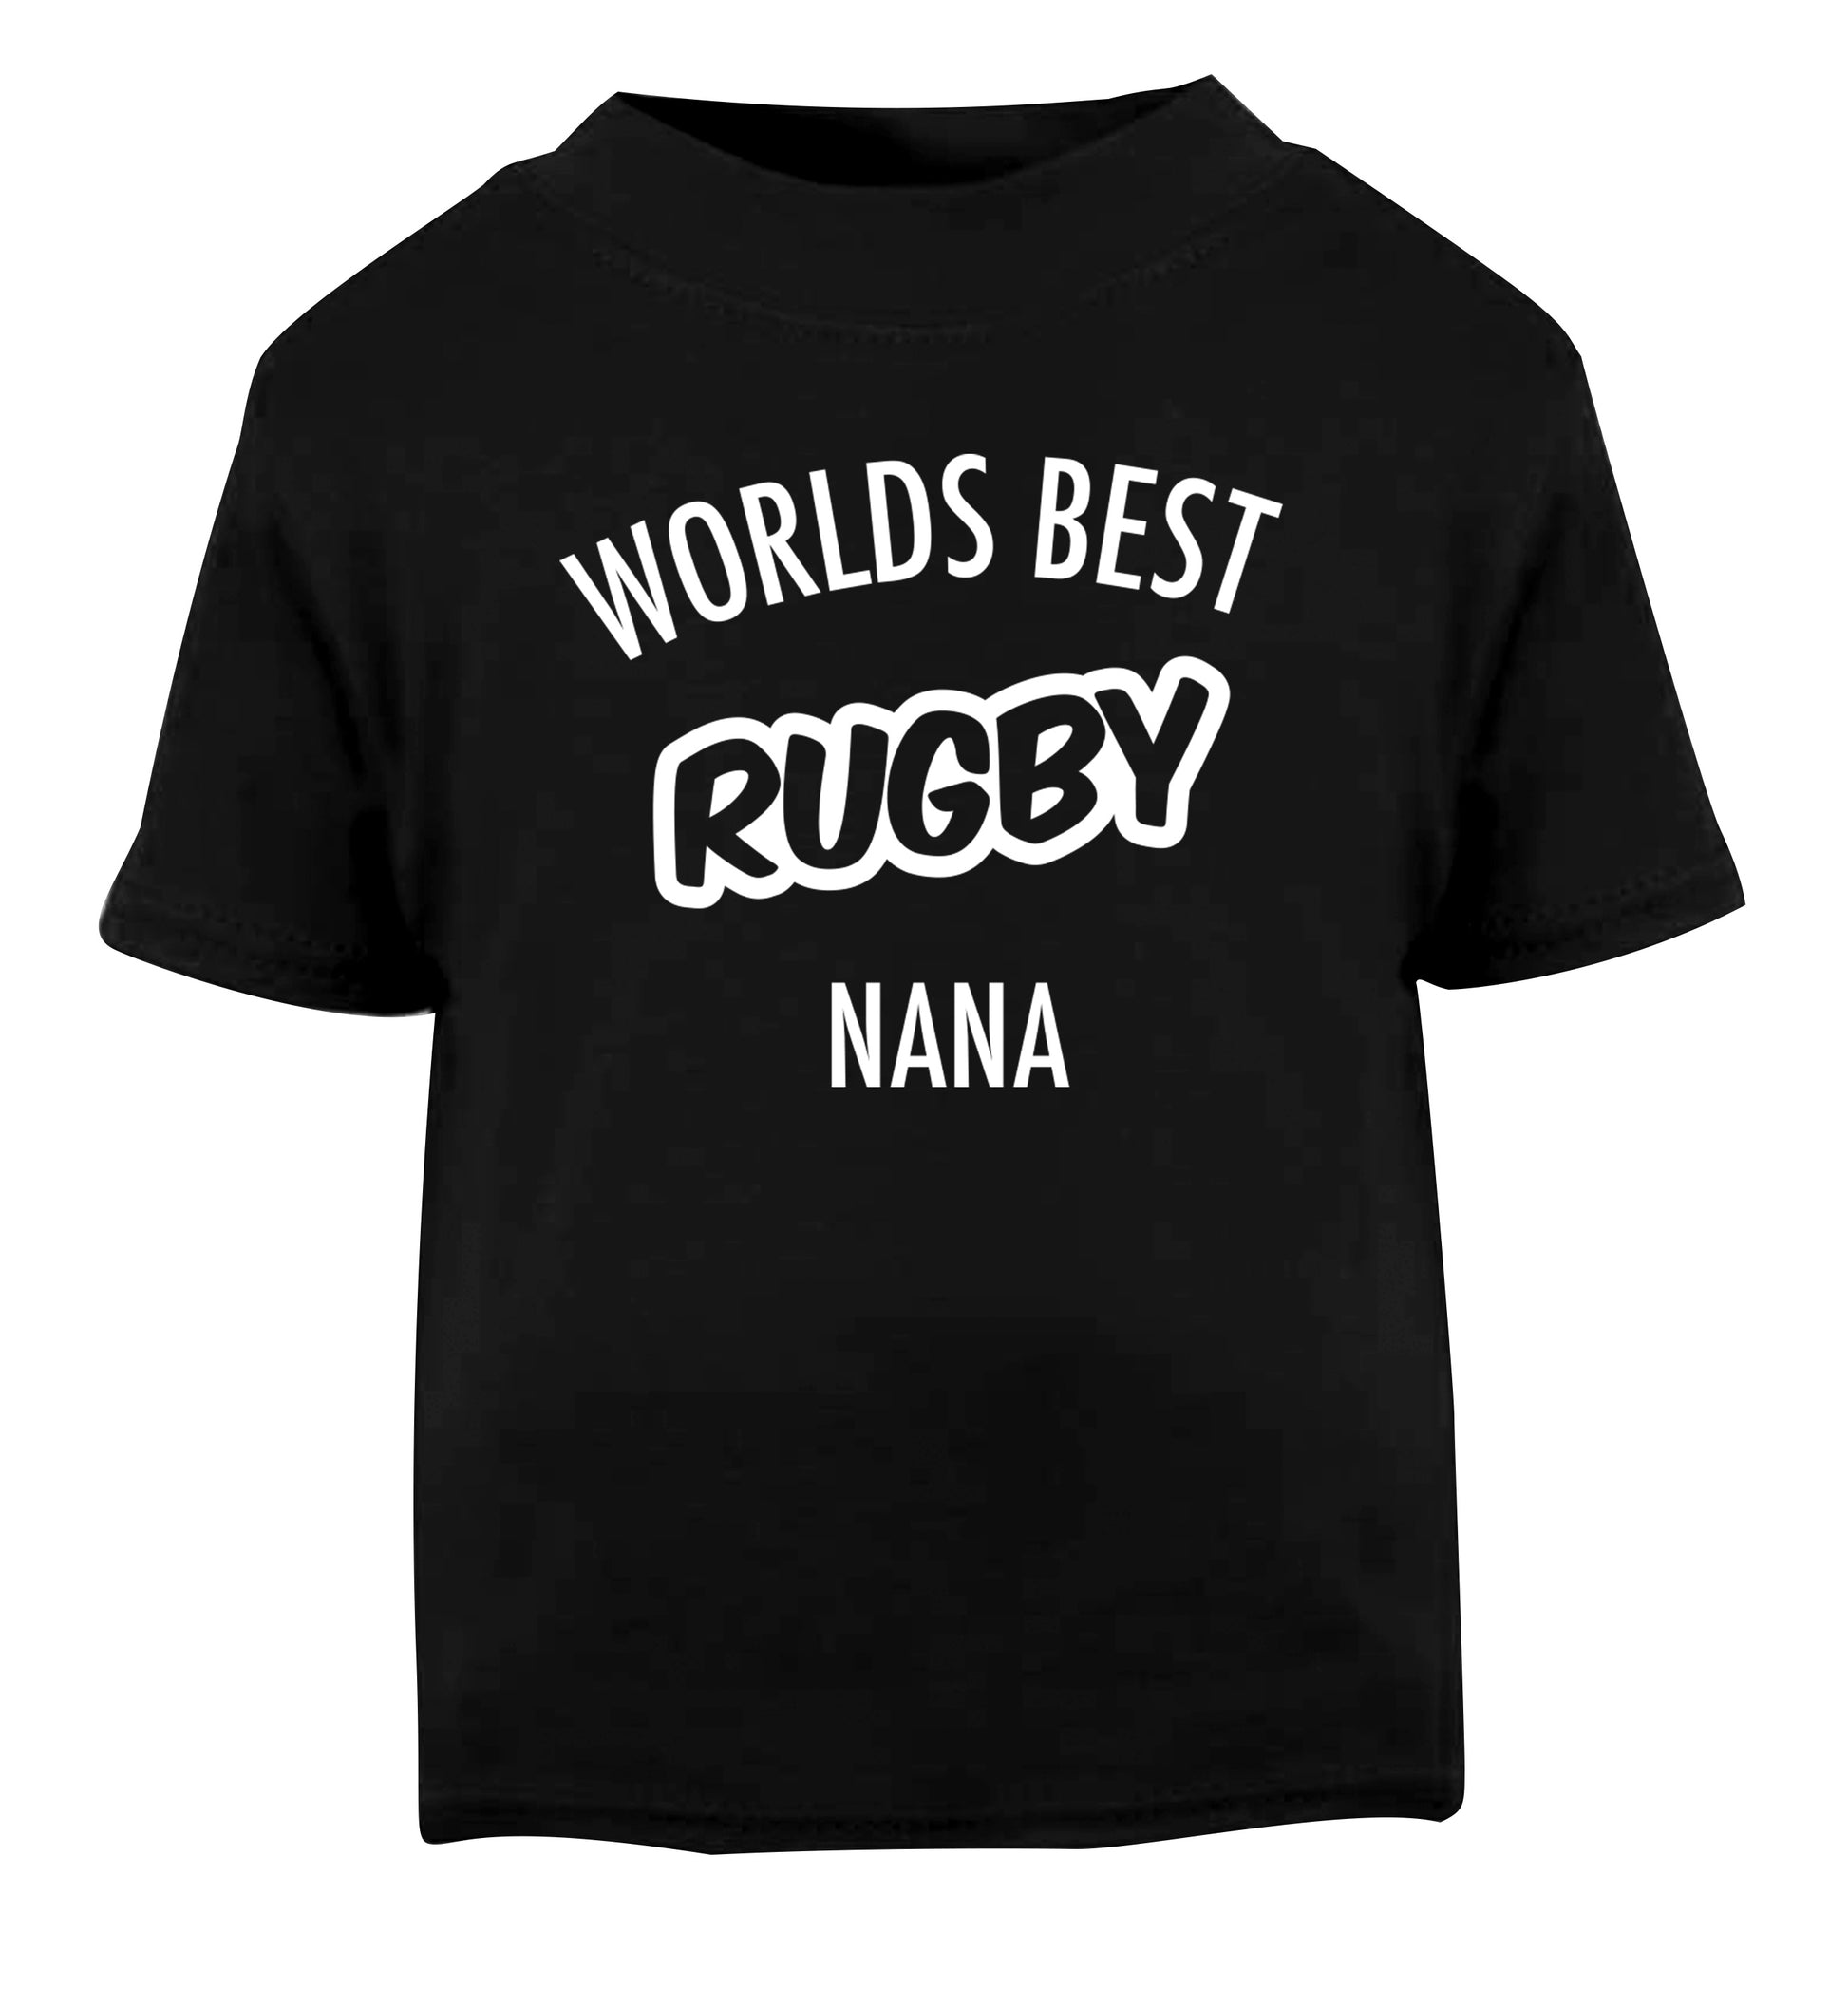 Worlds Best Rugby Grandma Black Baby Toddler Tshirt 2 years